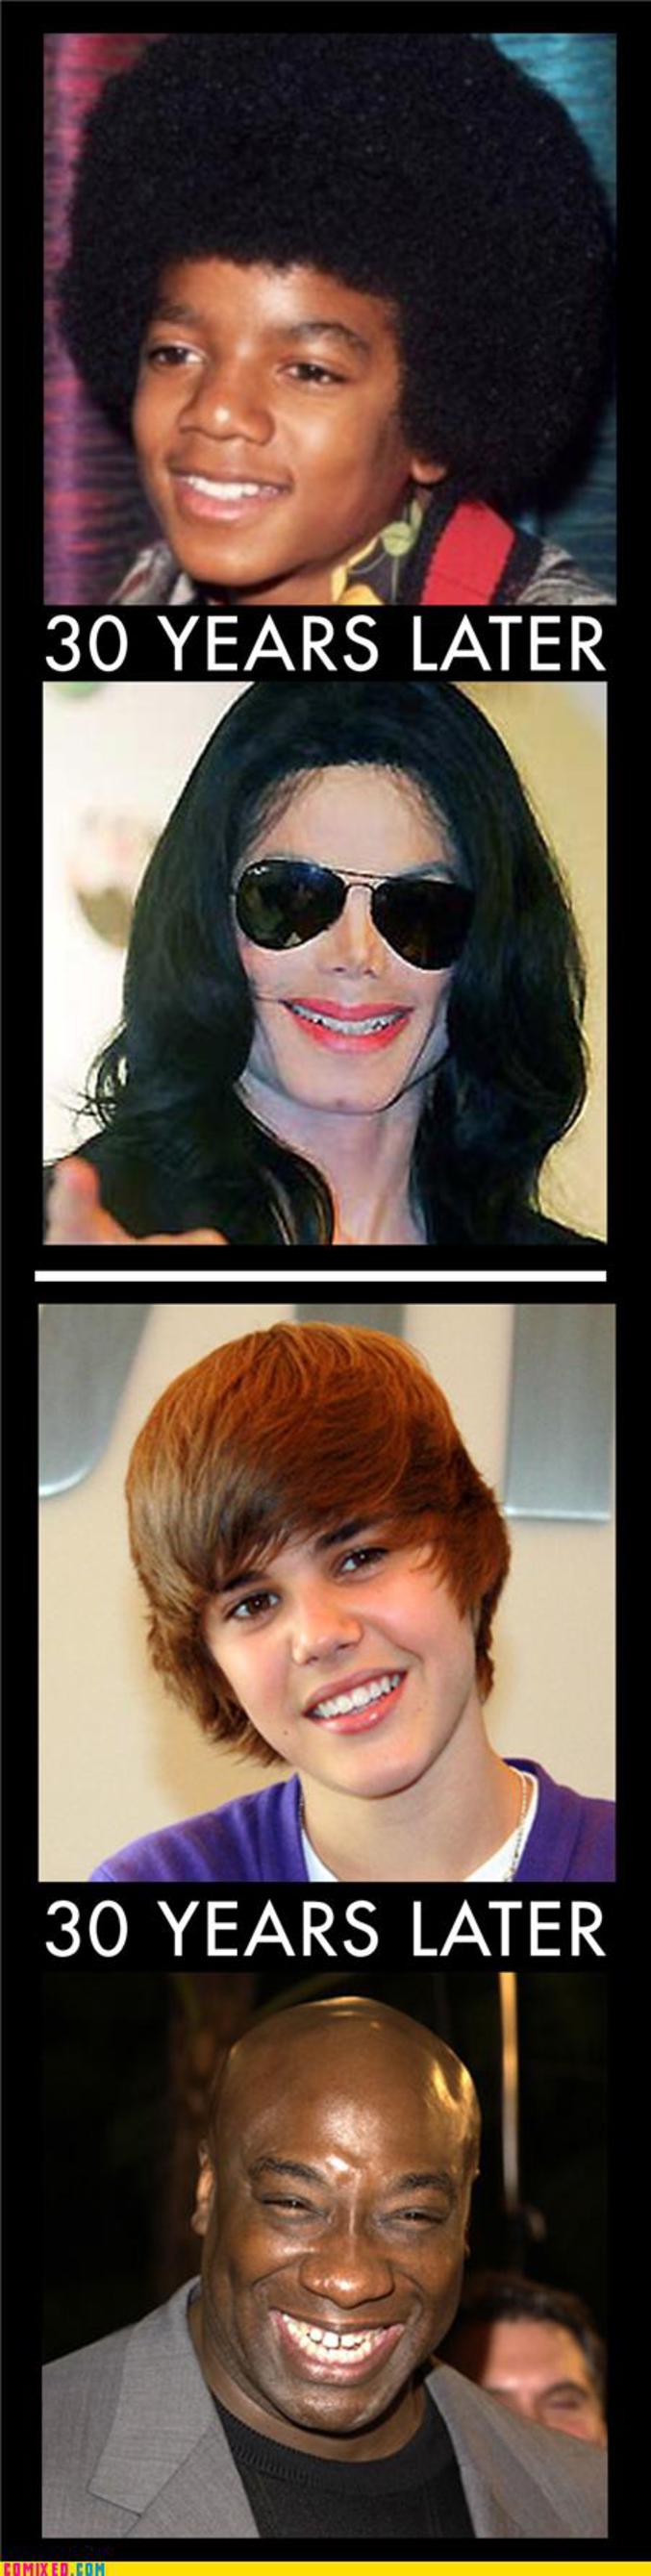 Justin Bieber Vs Michael Jackson.